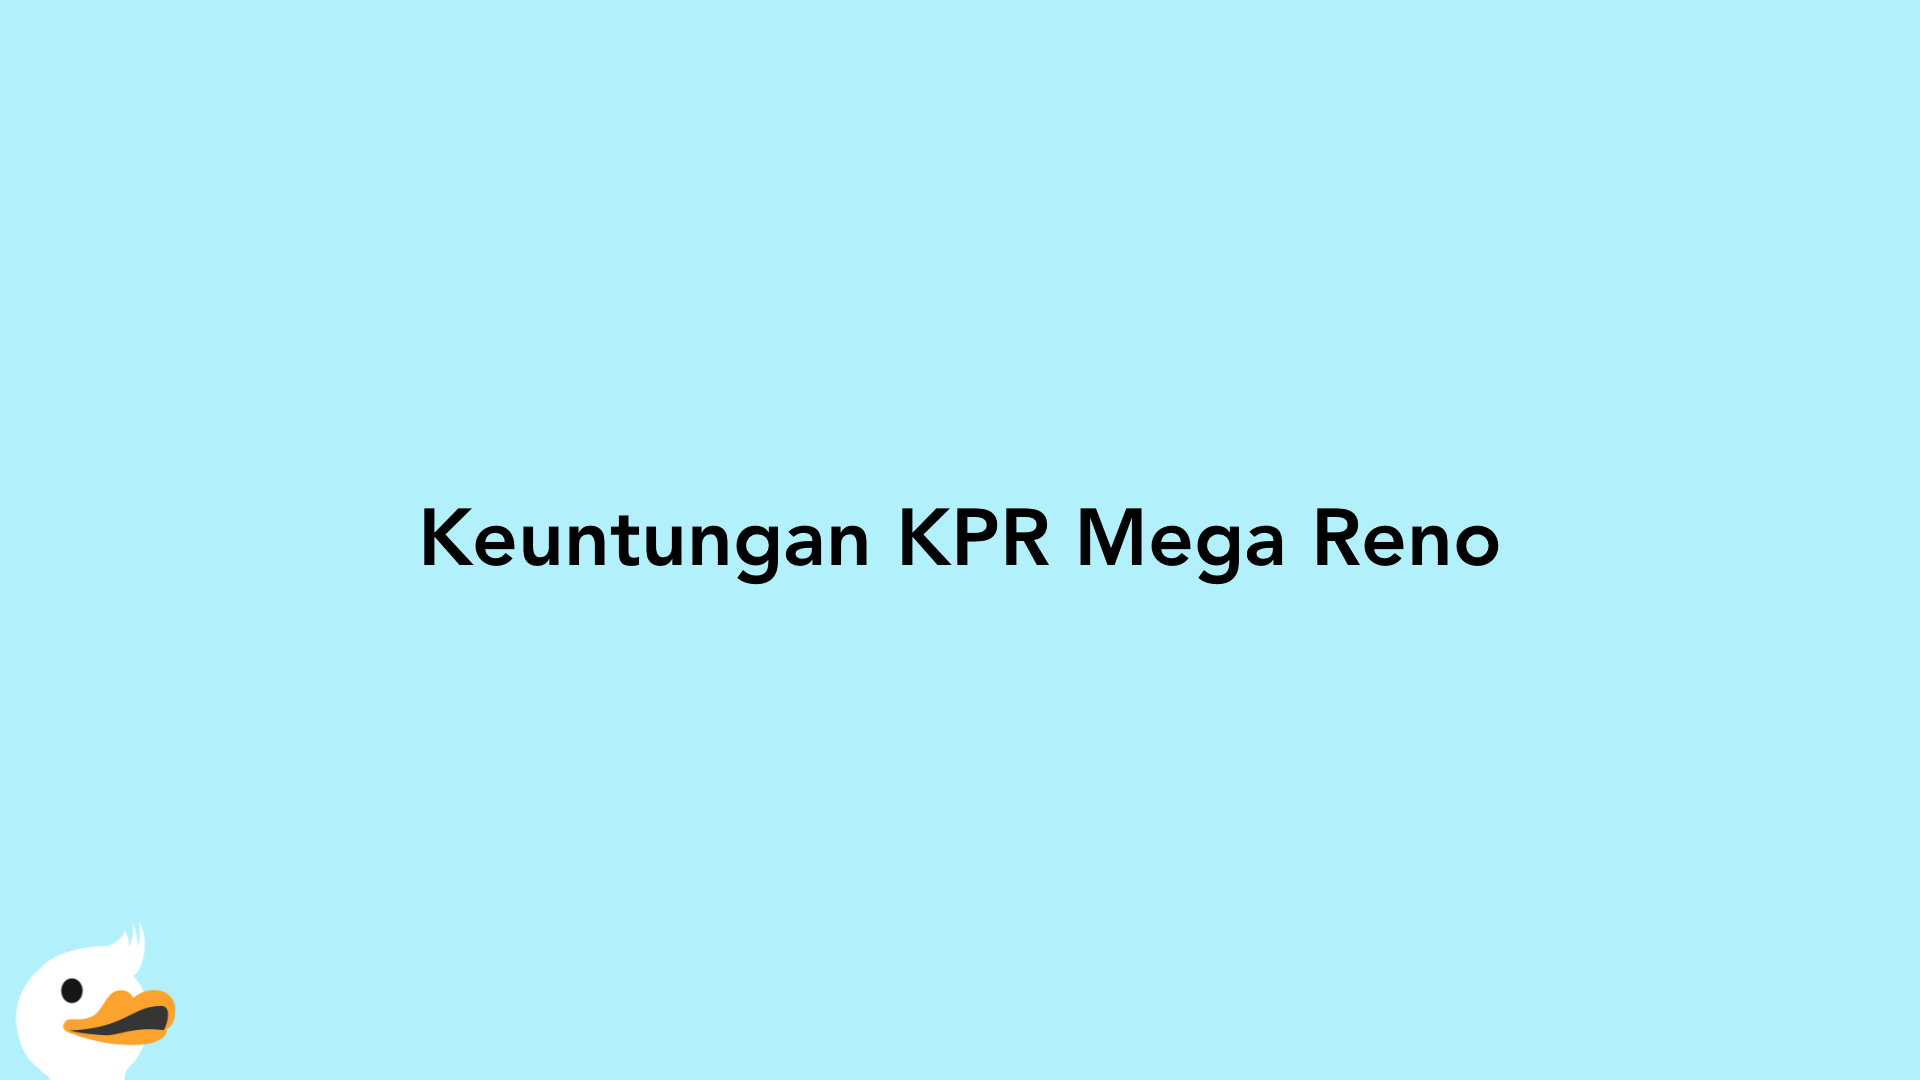 Keuntungan KPR Mega Reno